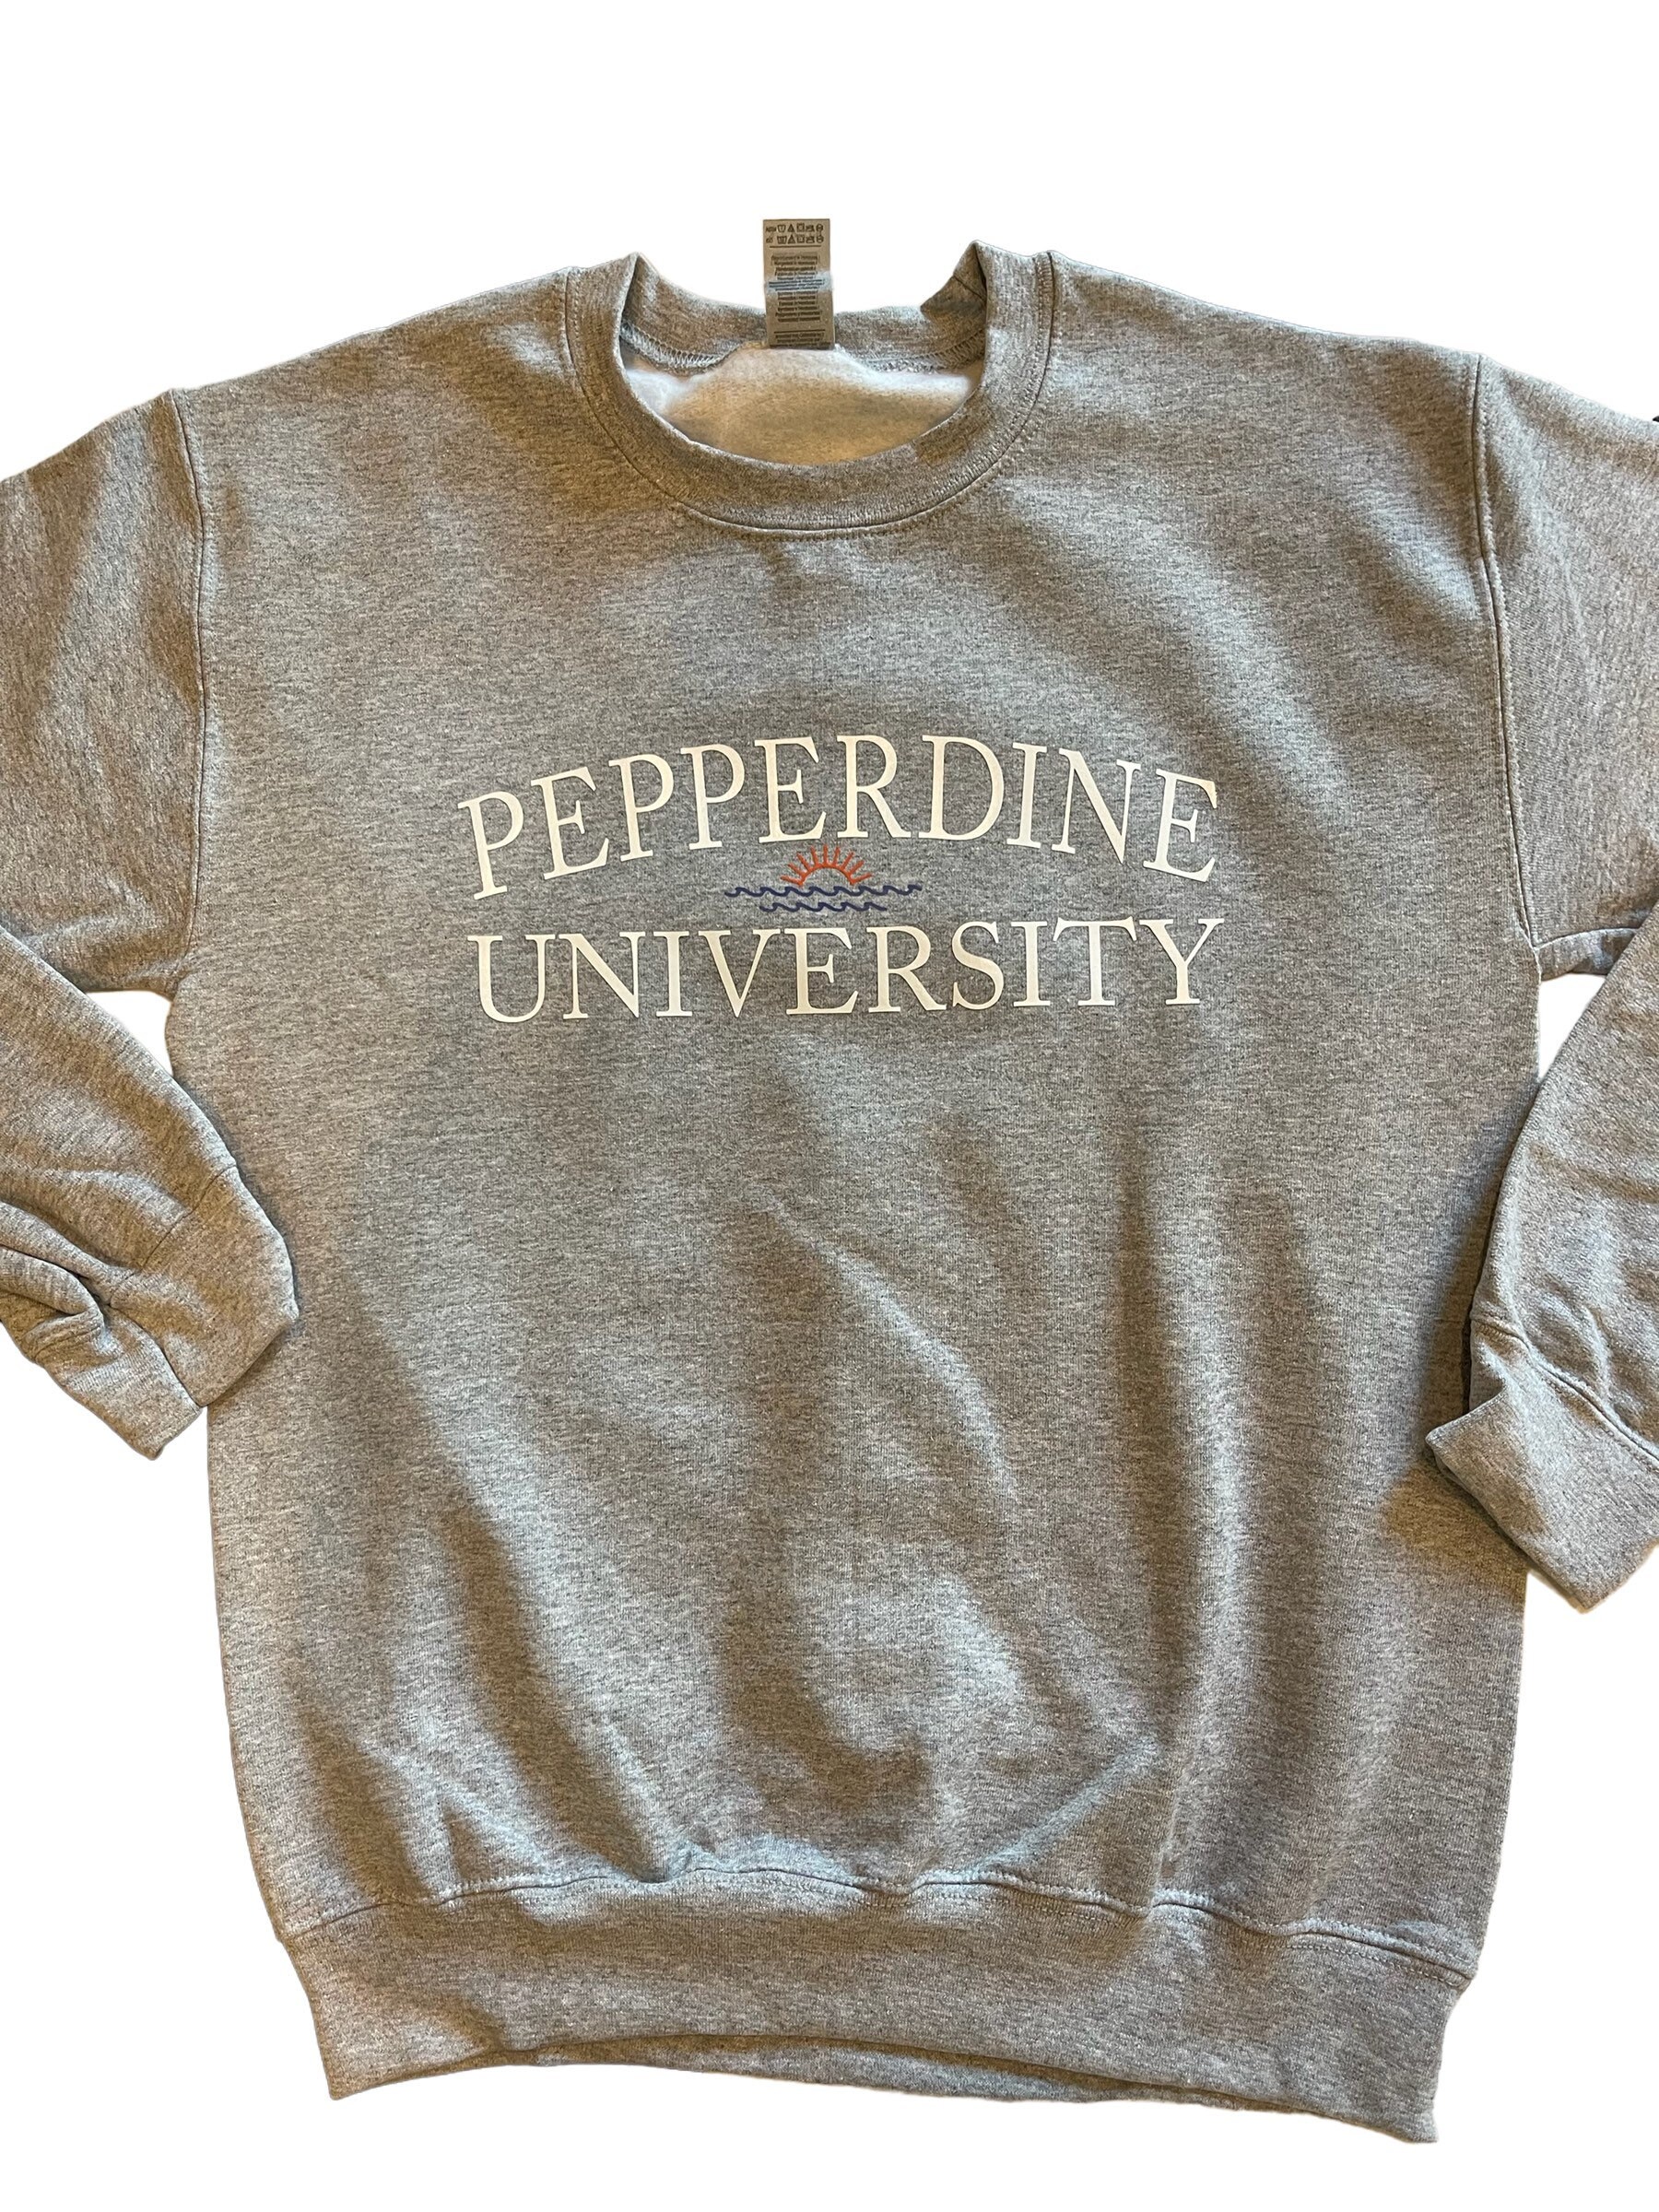 Pepperdine University Sweatshirt With Sun and Waves - Etsy